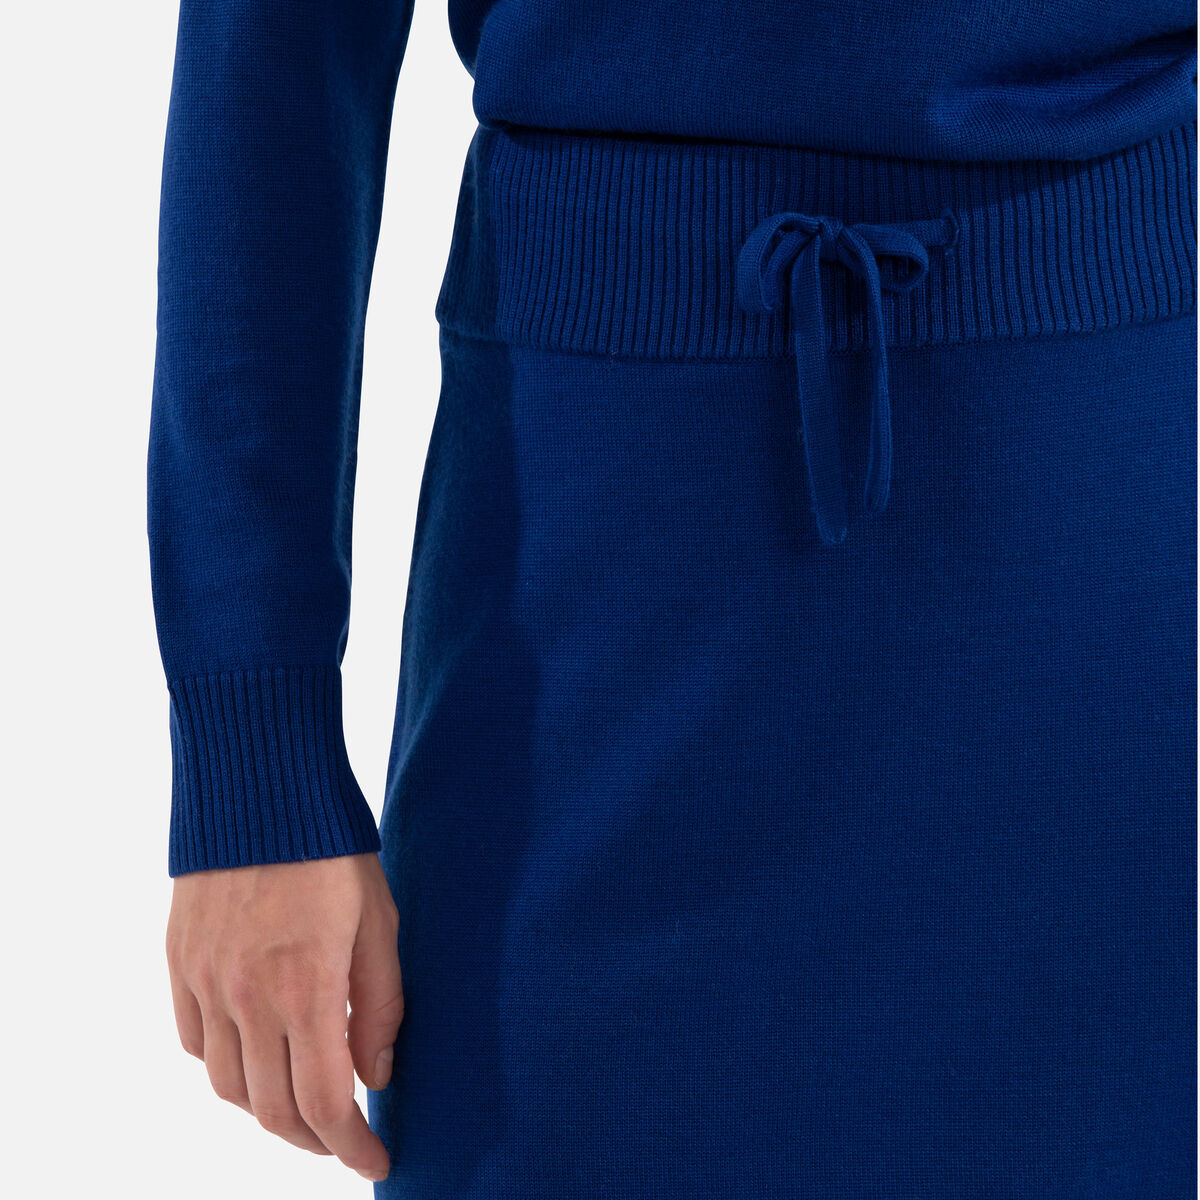 Rossignol Women's Tonal Skirt Blue